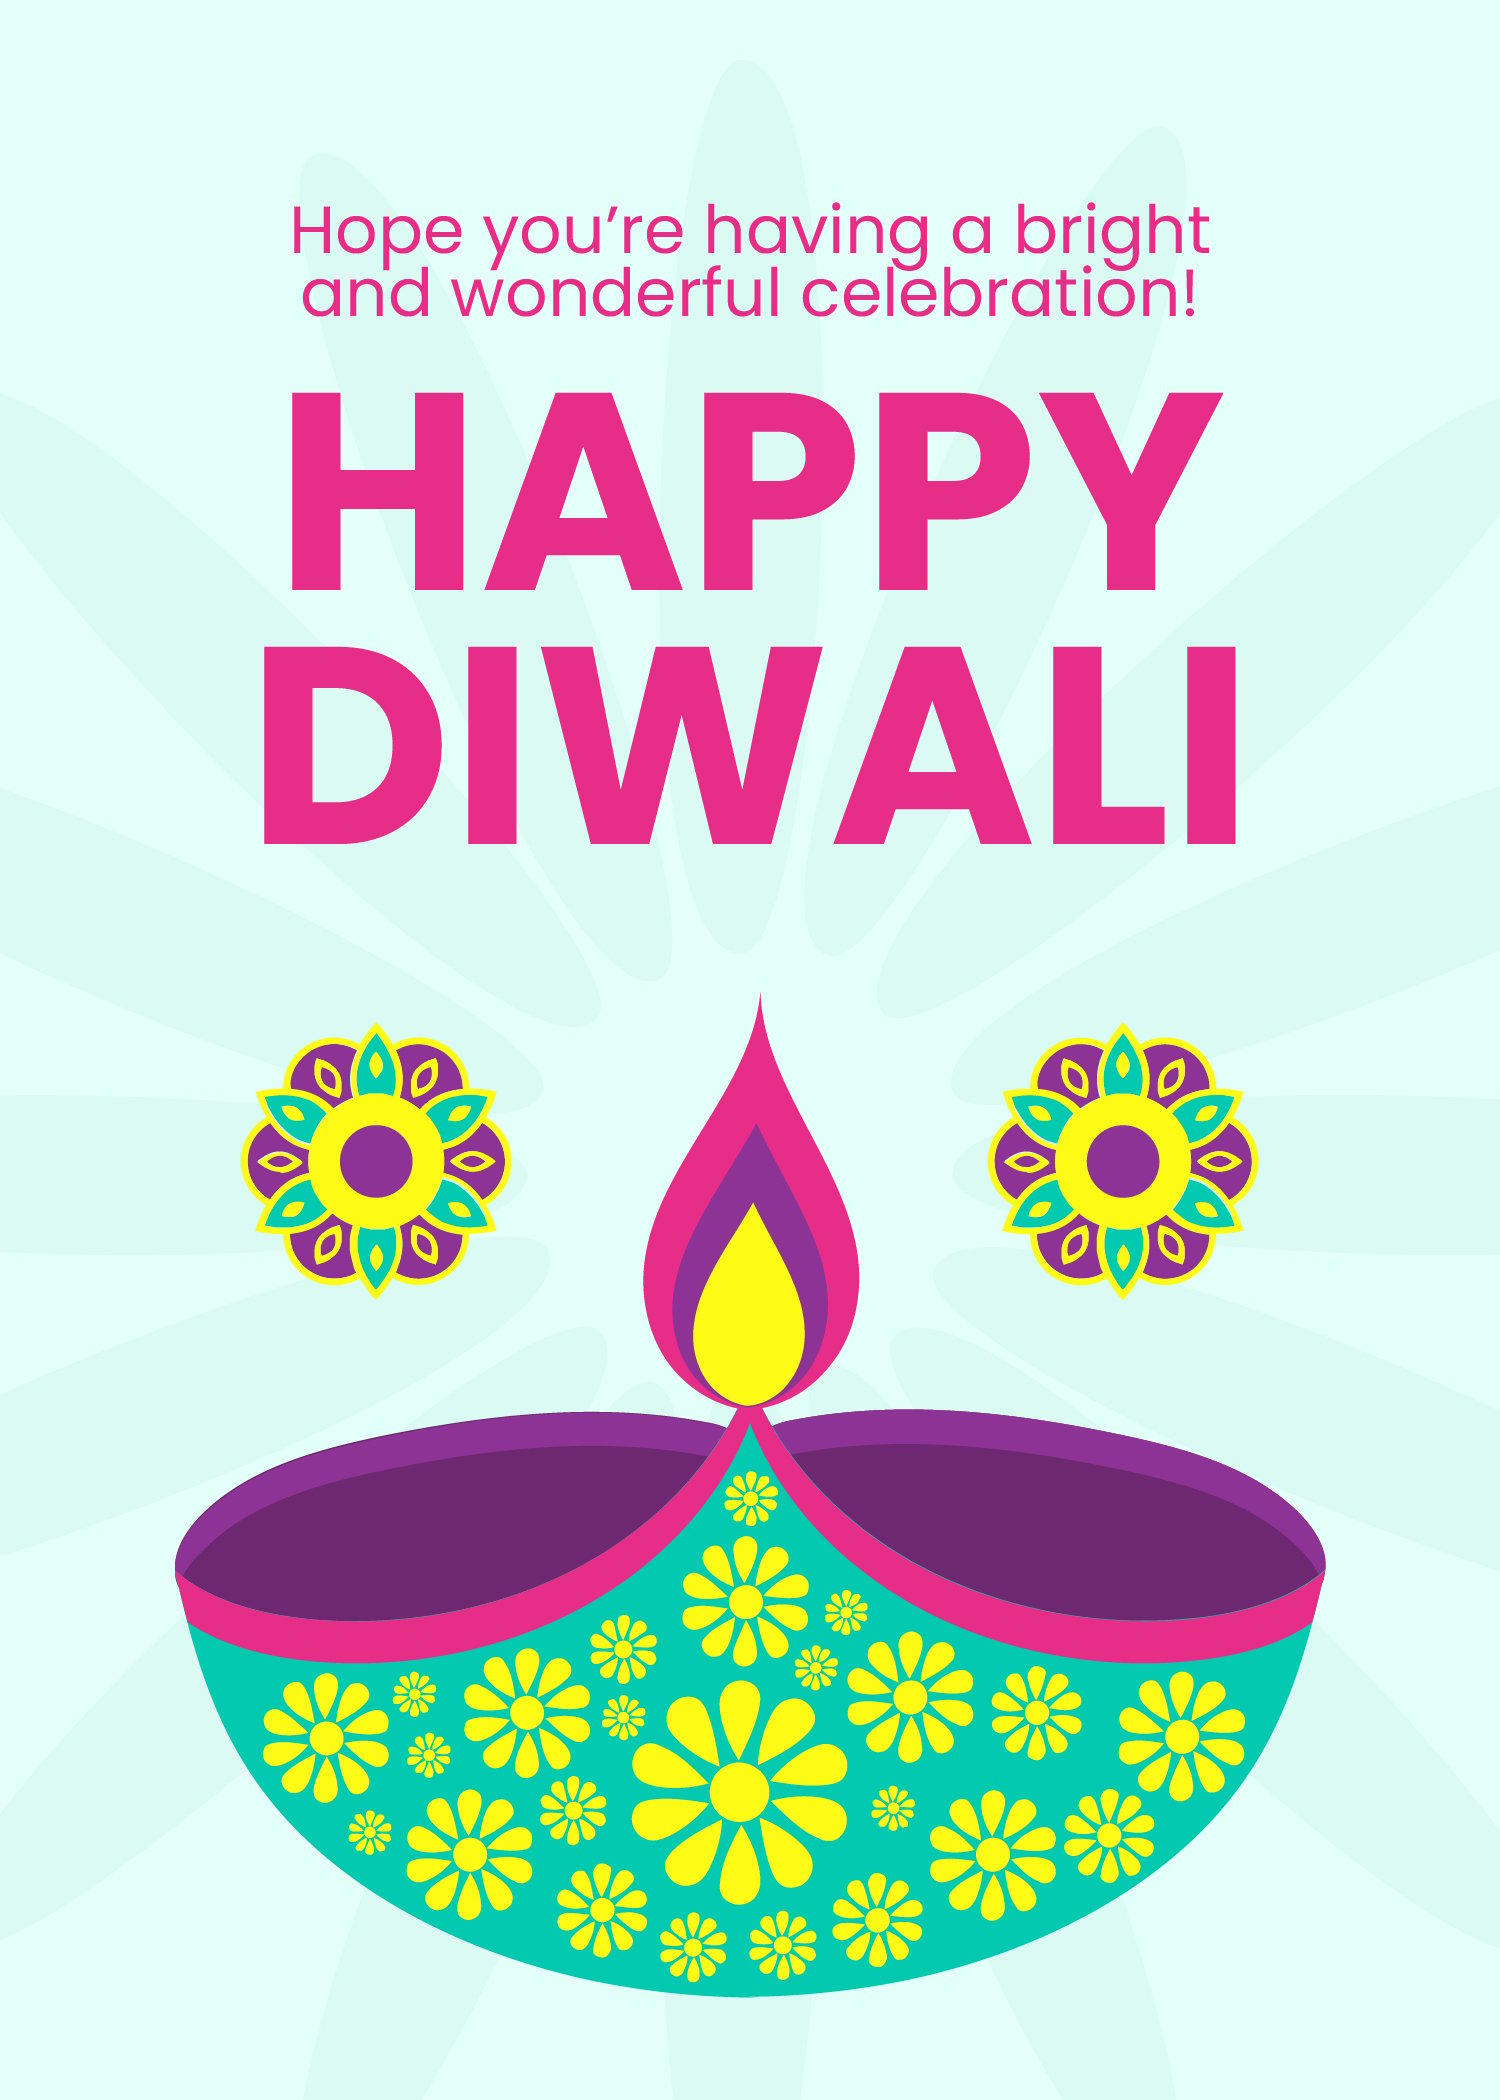 Free Diwali Message in Word, Google Docs, Illustrator, PSD, Apple Pages, Publisher, EPS, SVG, JPG, PNG